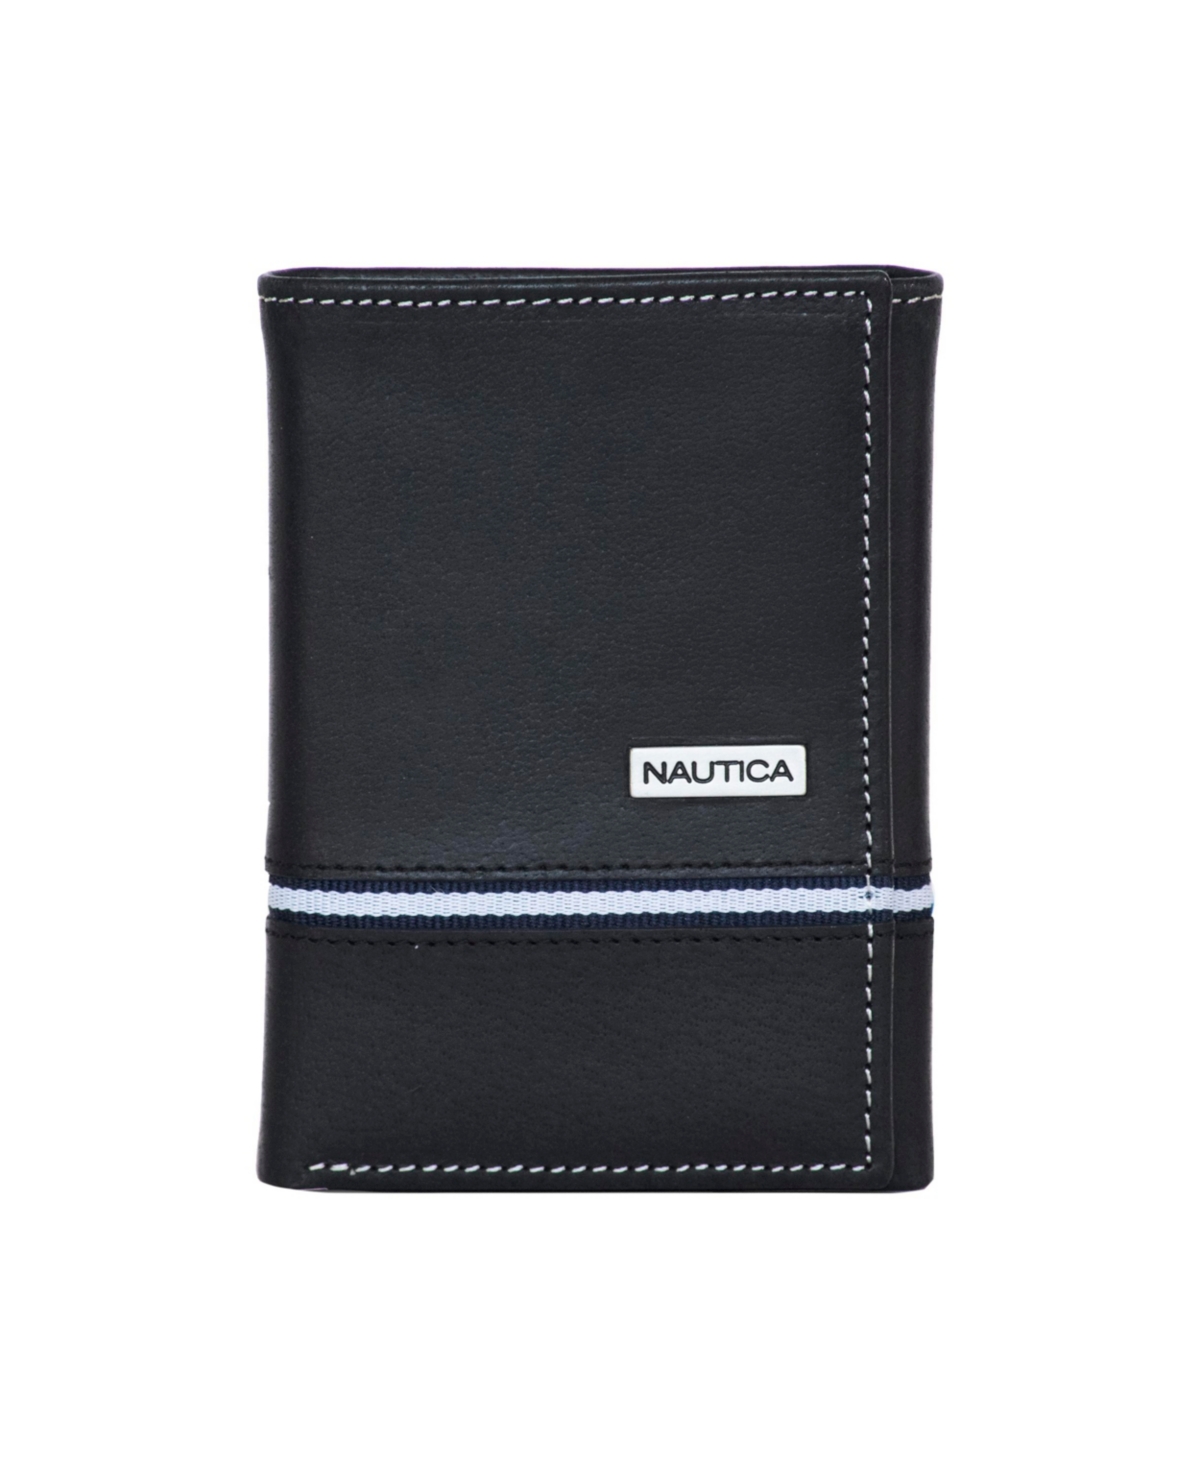 Nautica Men's Trifold Wallet In Black